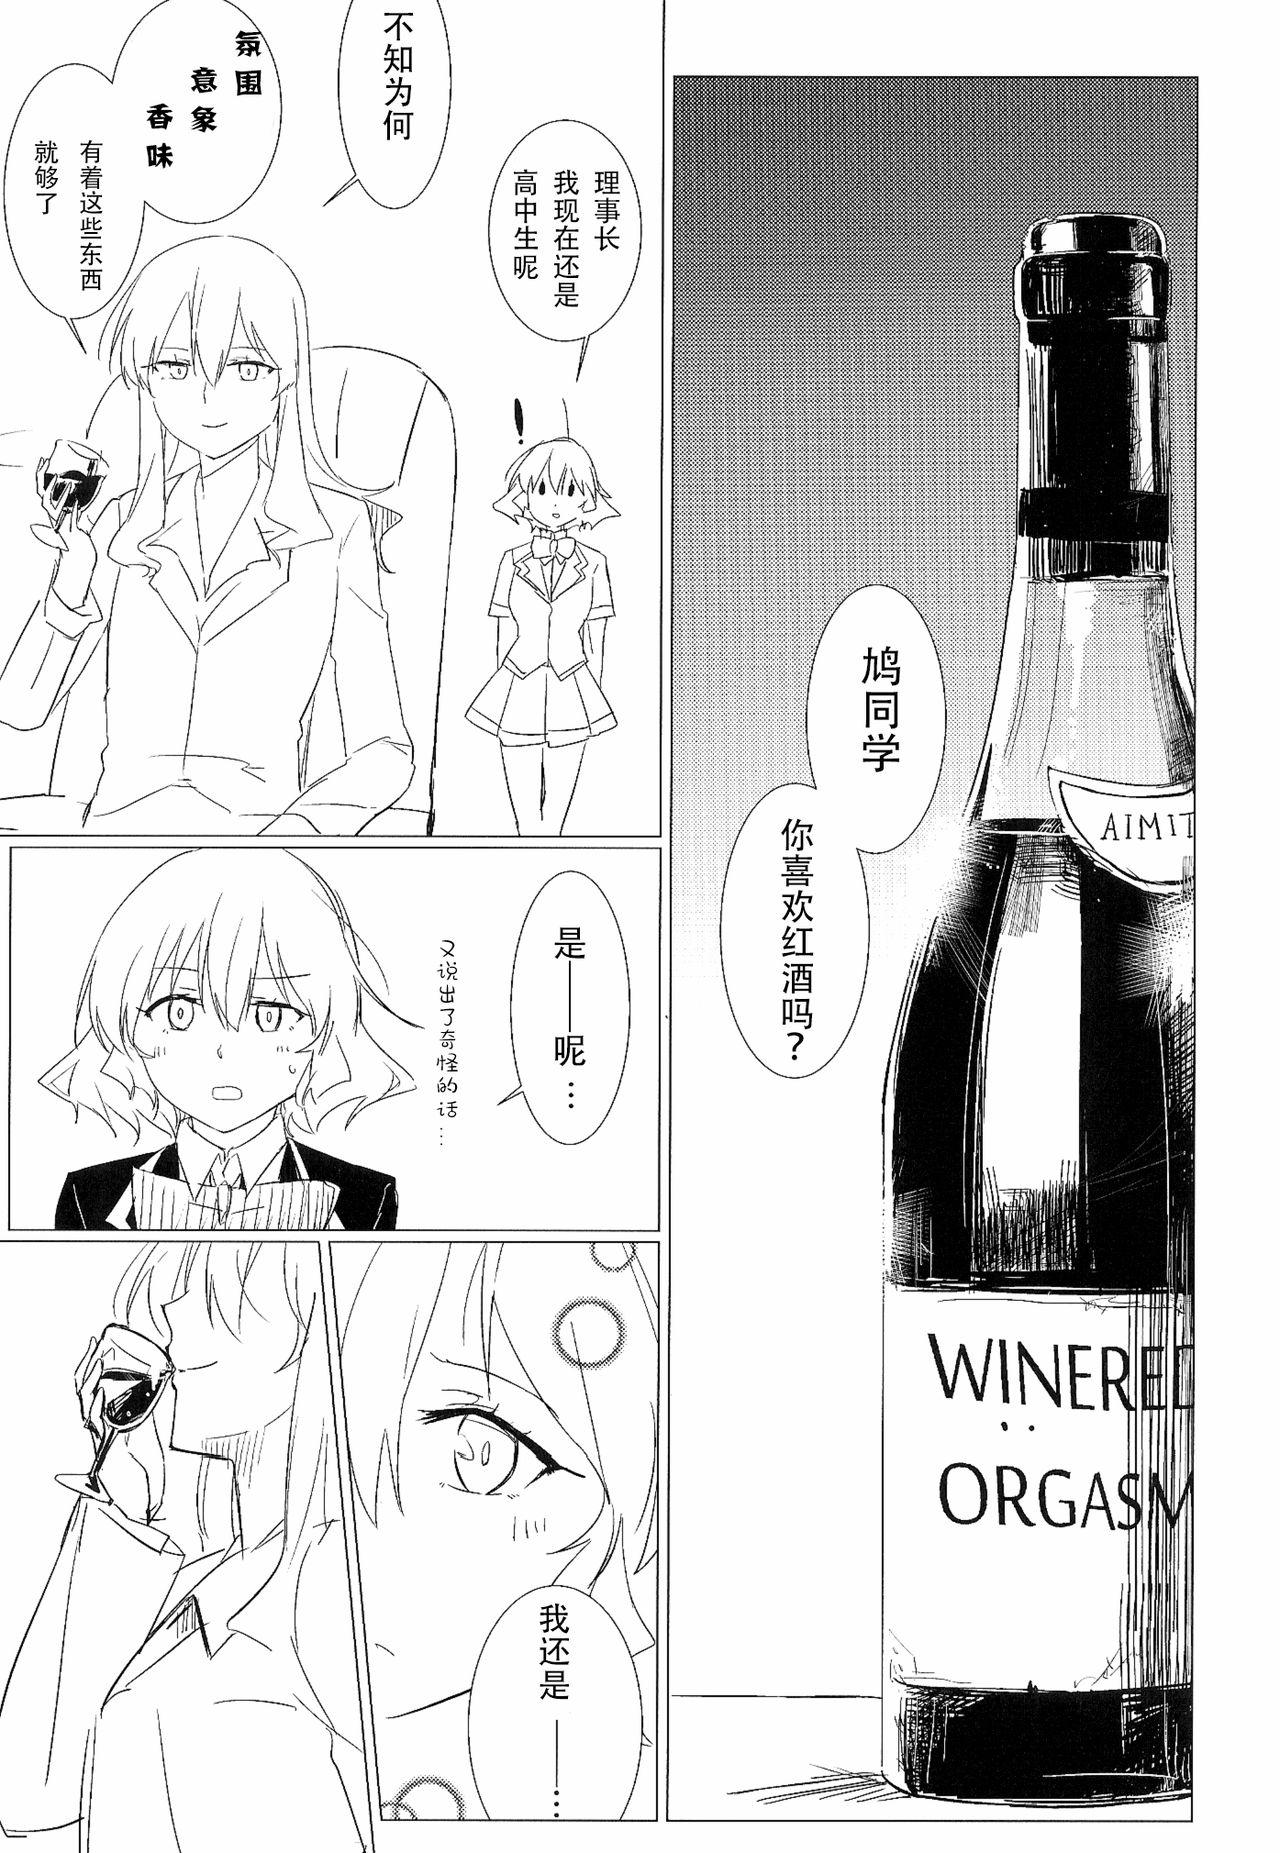 Pendeja Wine Red Orgasm - Akuma no riddle Cop - Page 4